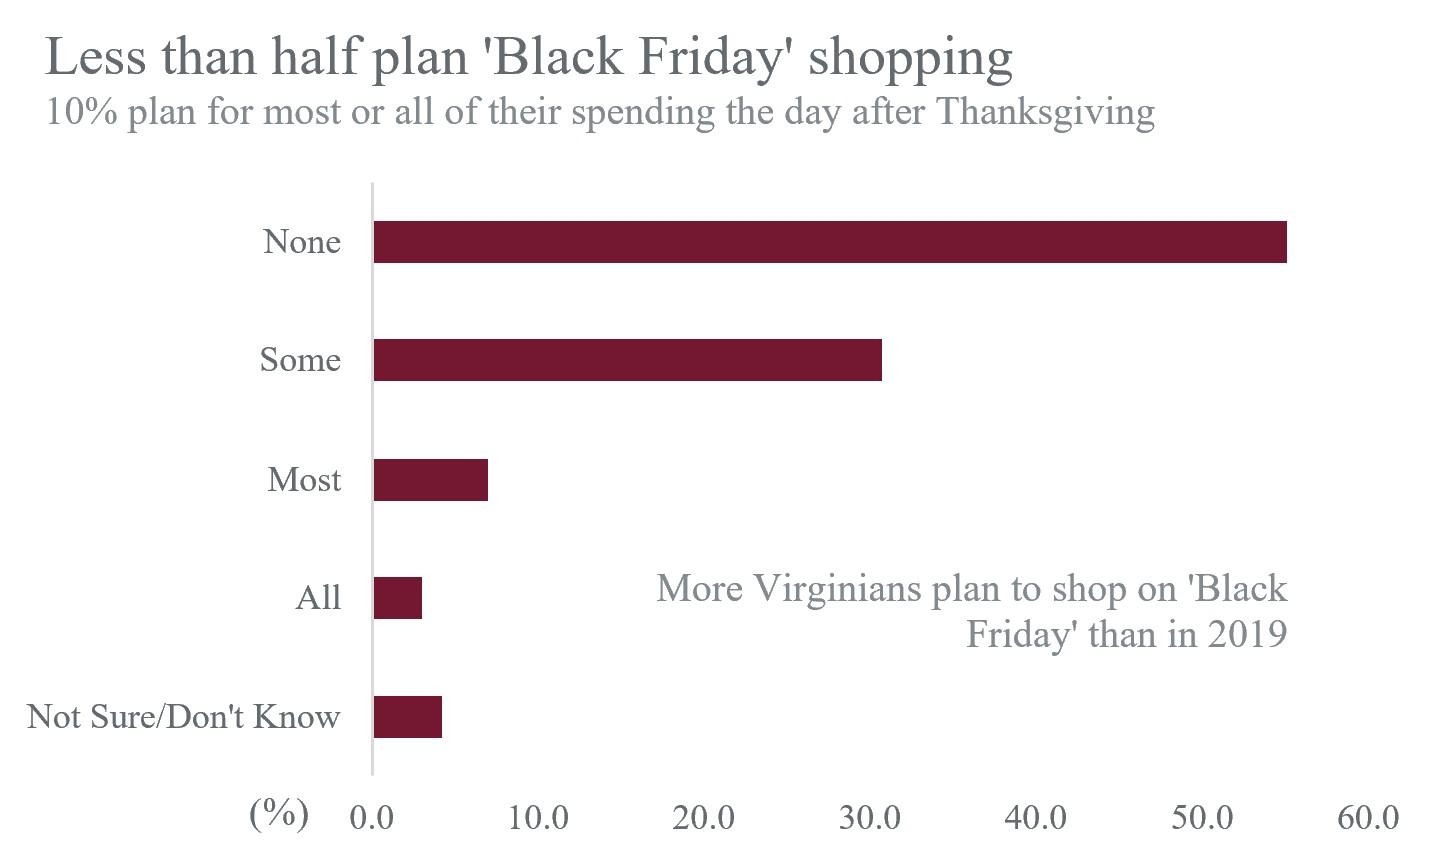 Less than half plan Black Friday shopping